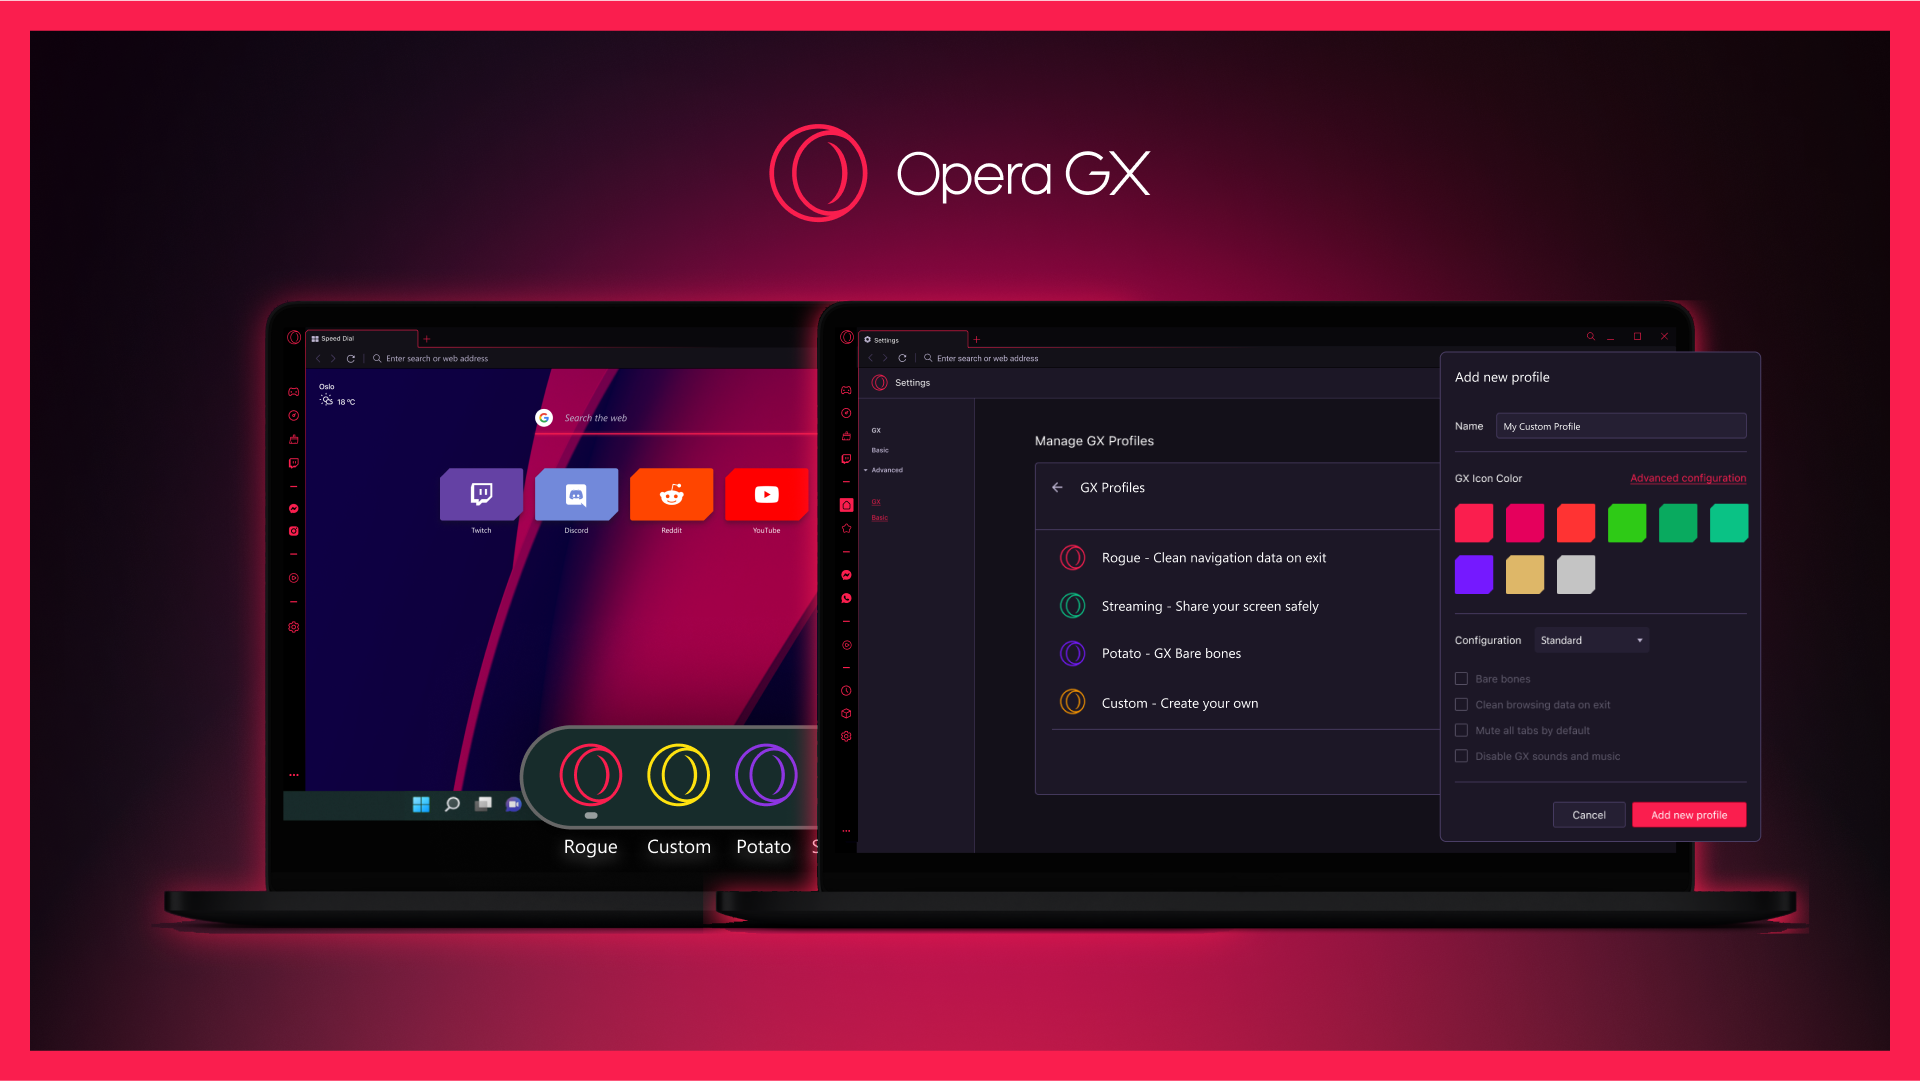 GX Profiles in Opera GX